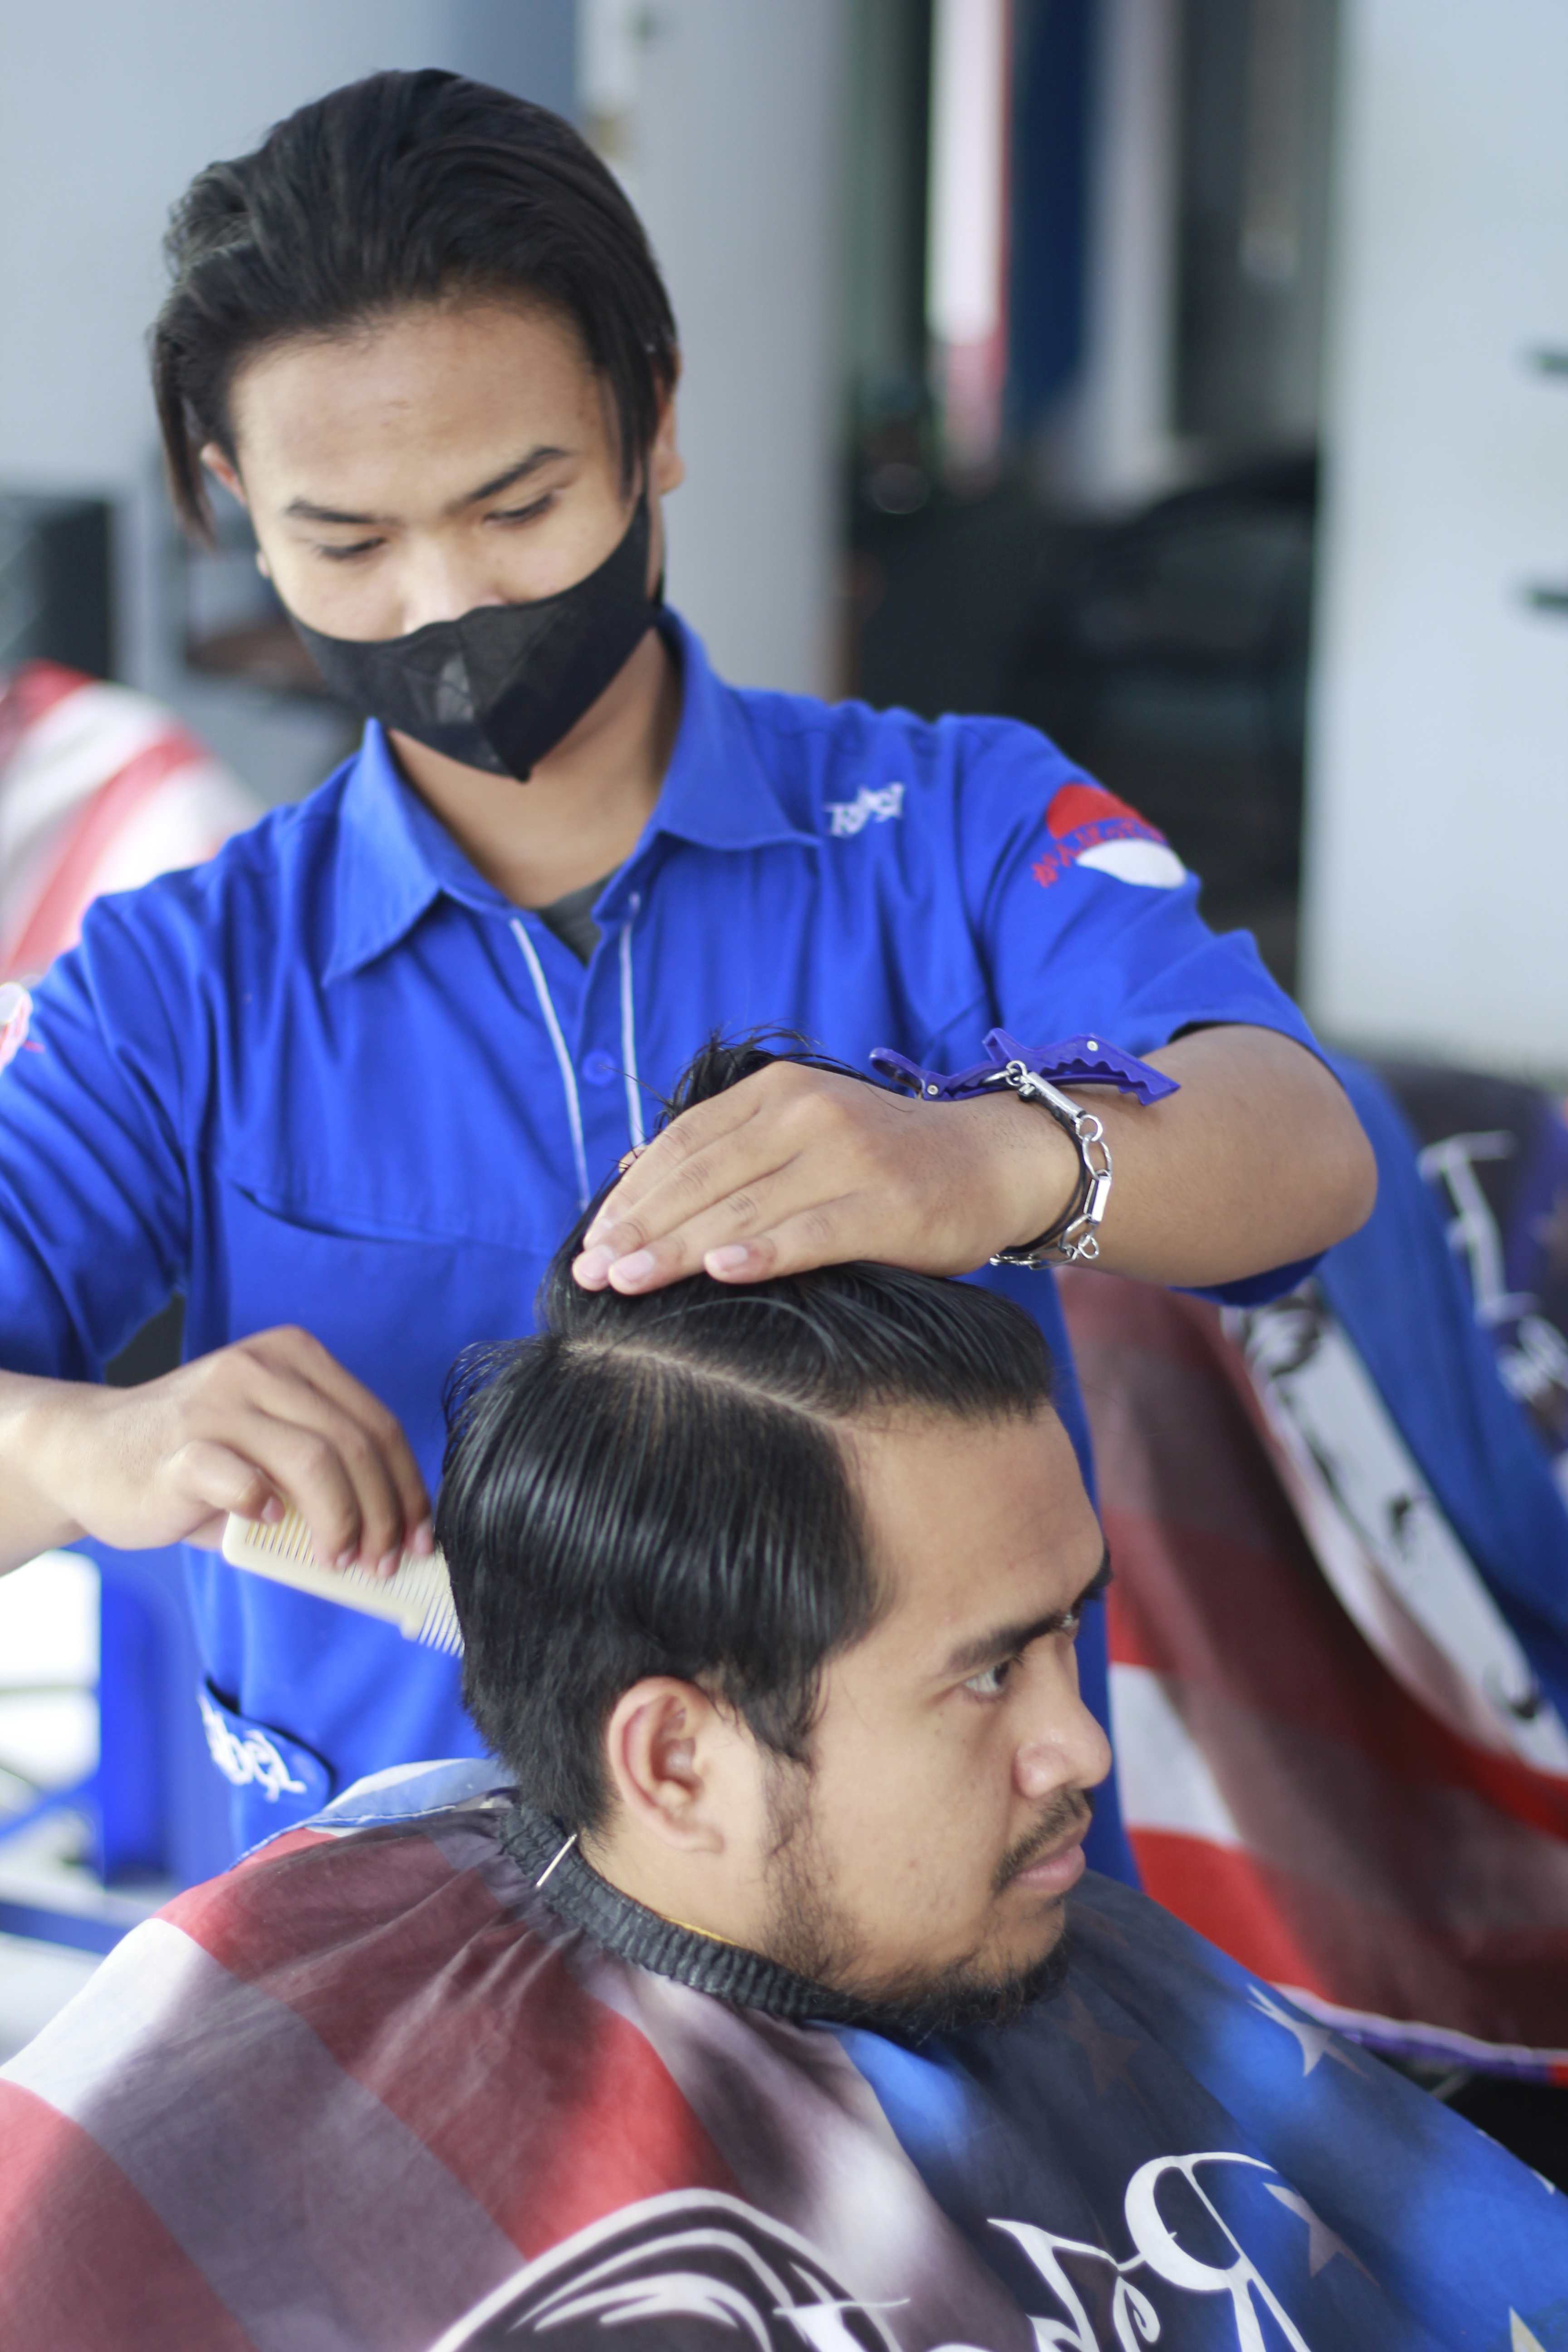 Lokasi Tempat Barbershop Di Kelurahan Tlogowaru Profesional